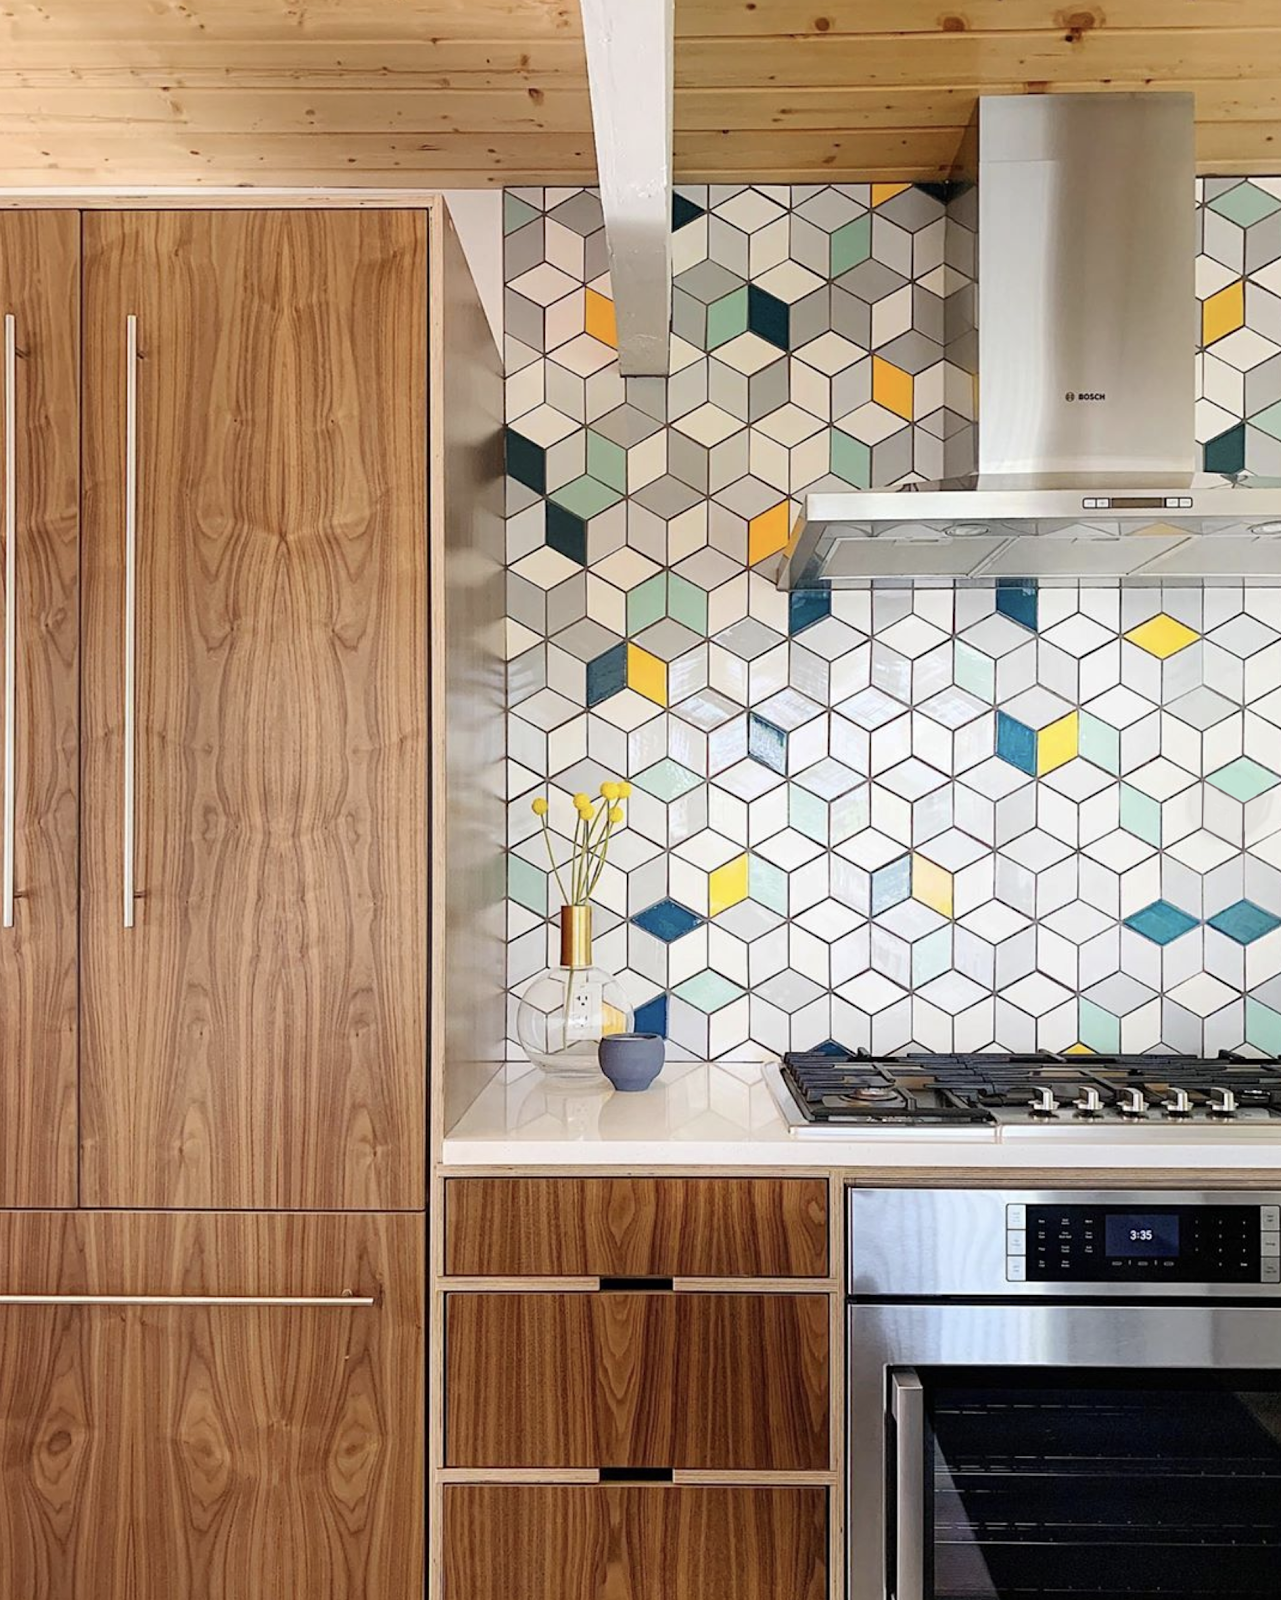 Backsplash Tile for Kitchen. Incredible Artwork and Detail on This